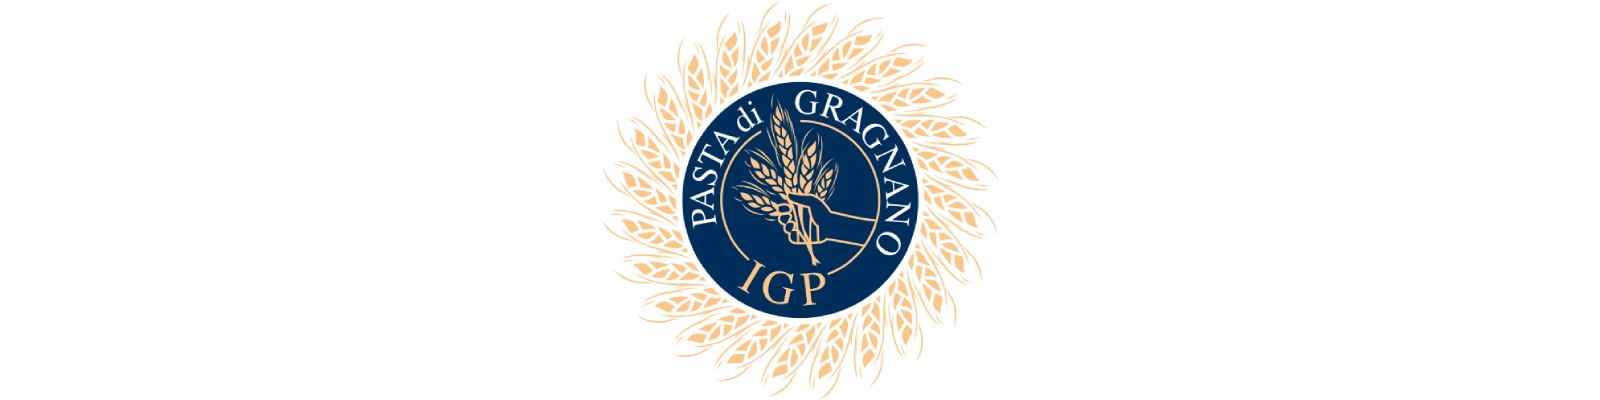 Garofalo obtient la certification IGP